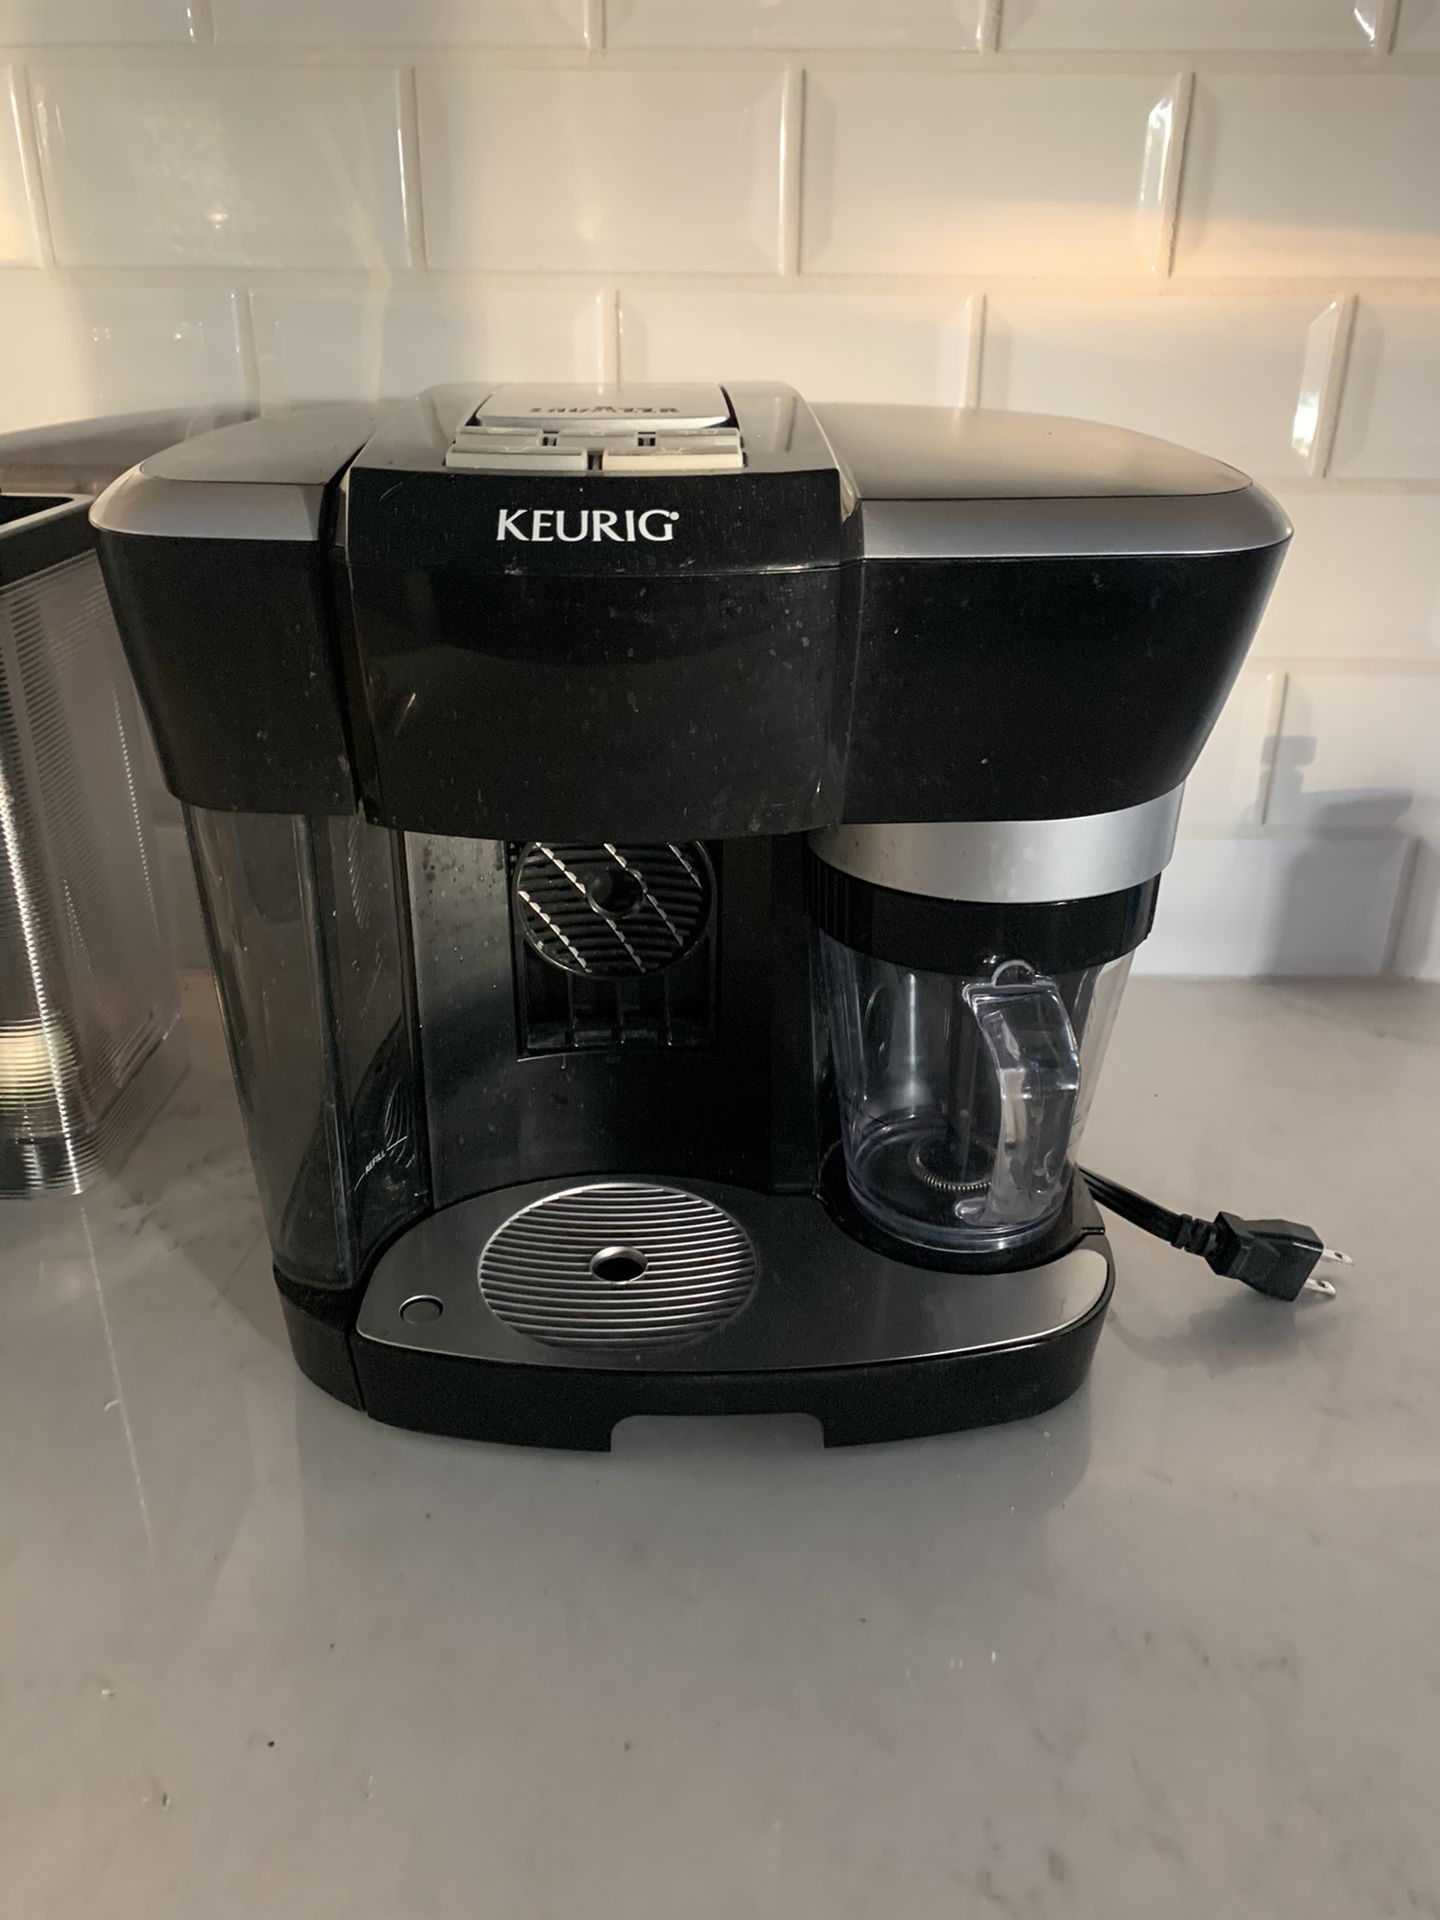 Keurig Coffee, Latte, Cappuccino maker like new